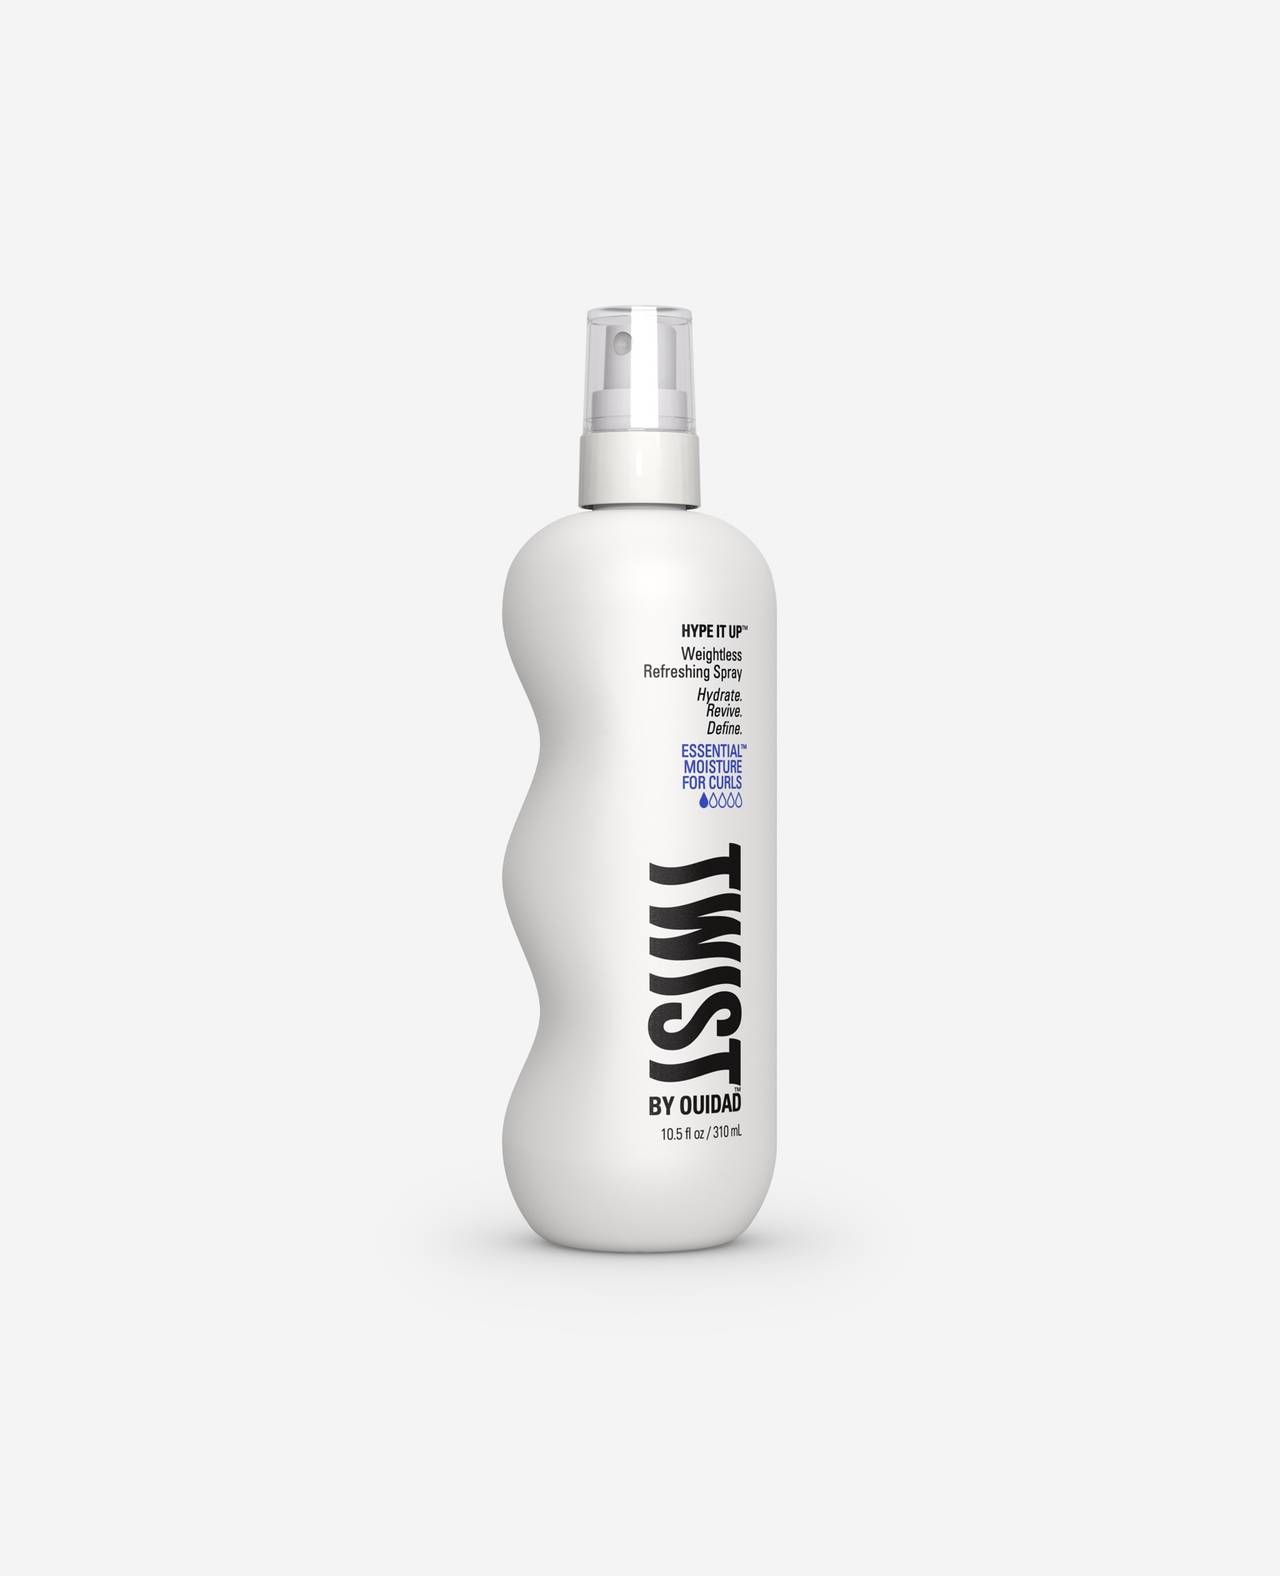 Twist Hype it Up Refreshing Spray Essential Moisture for Curls 10.5 fl. Oz. front of spray bottle 